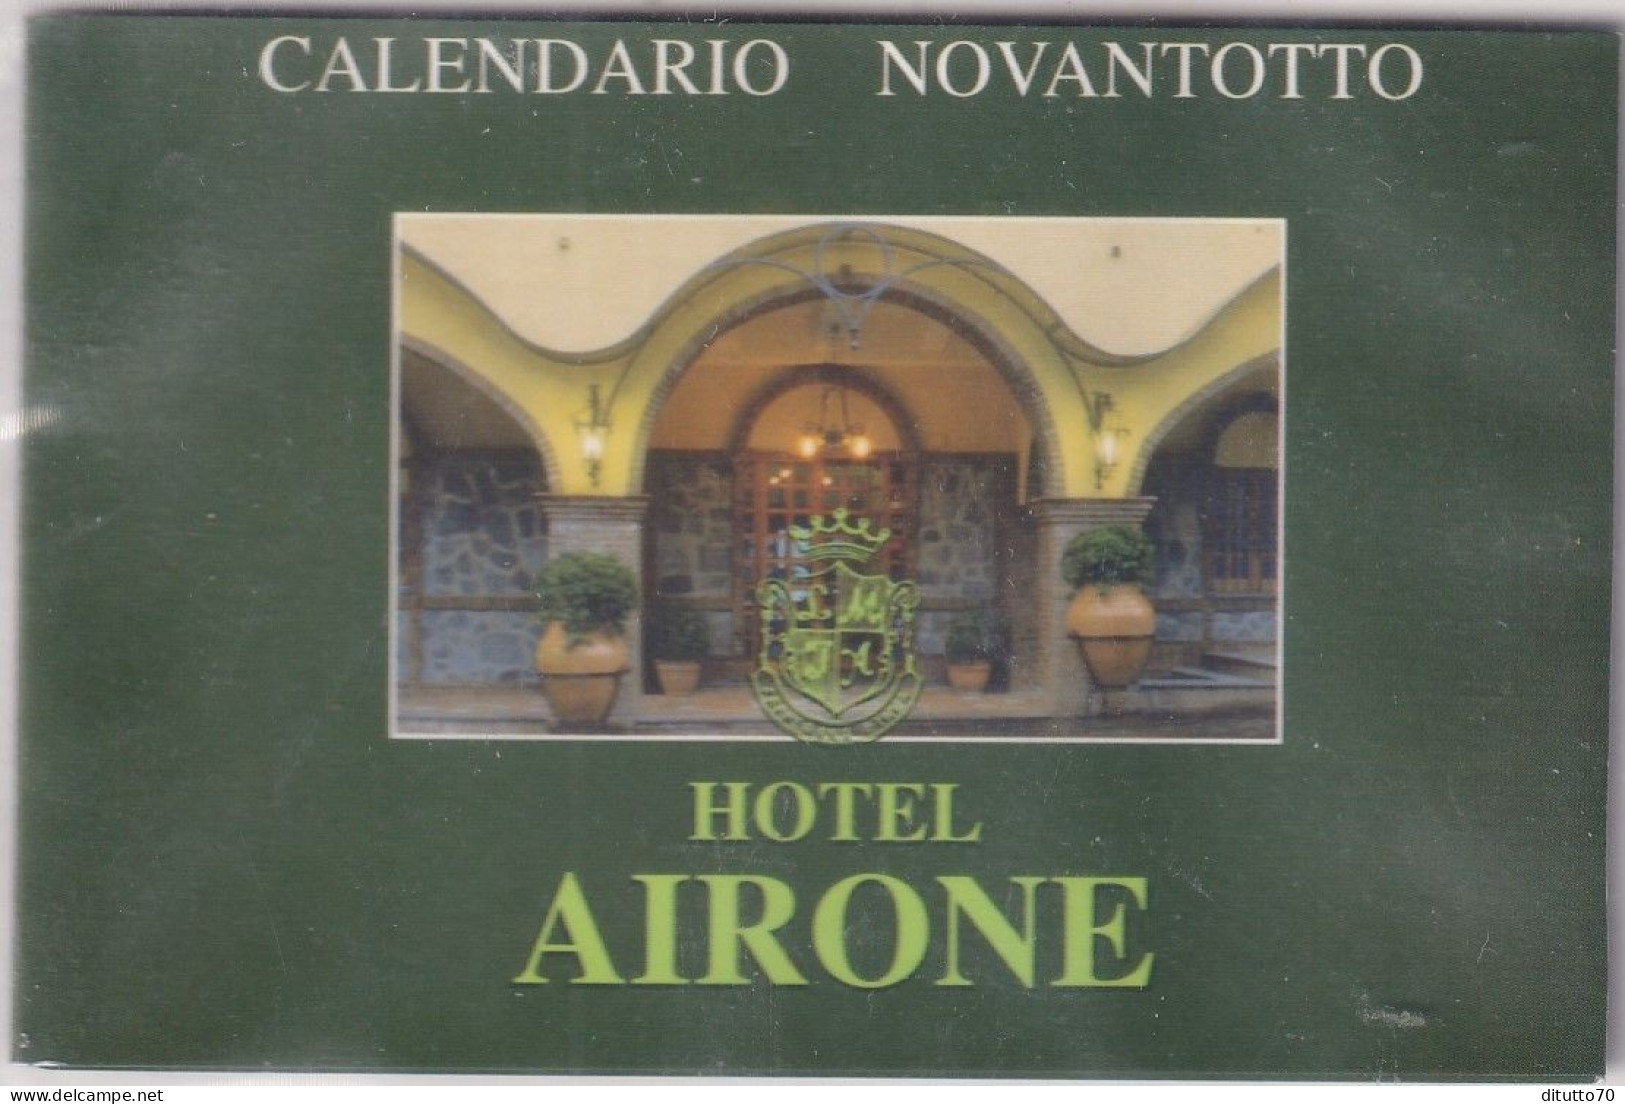 Calendarietto - Hotel Airone - Anno 1998 - Kleinformat : 1991-00